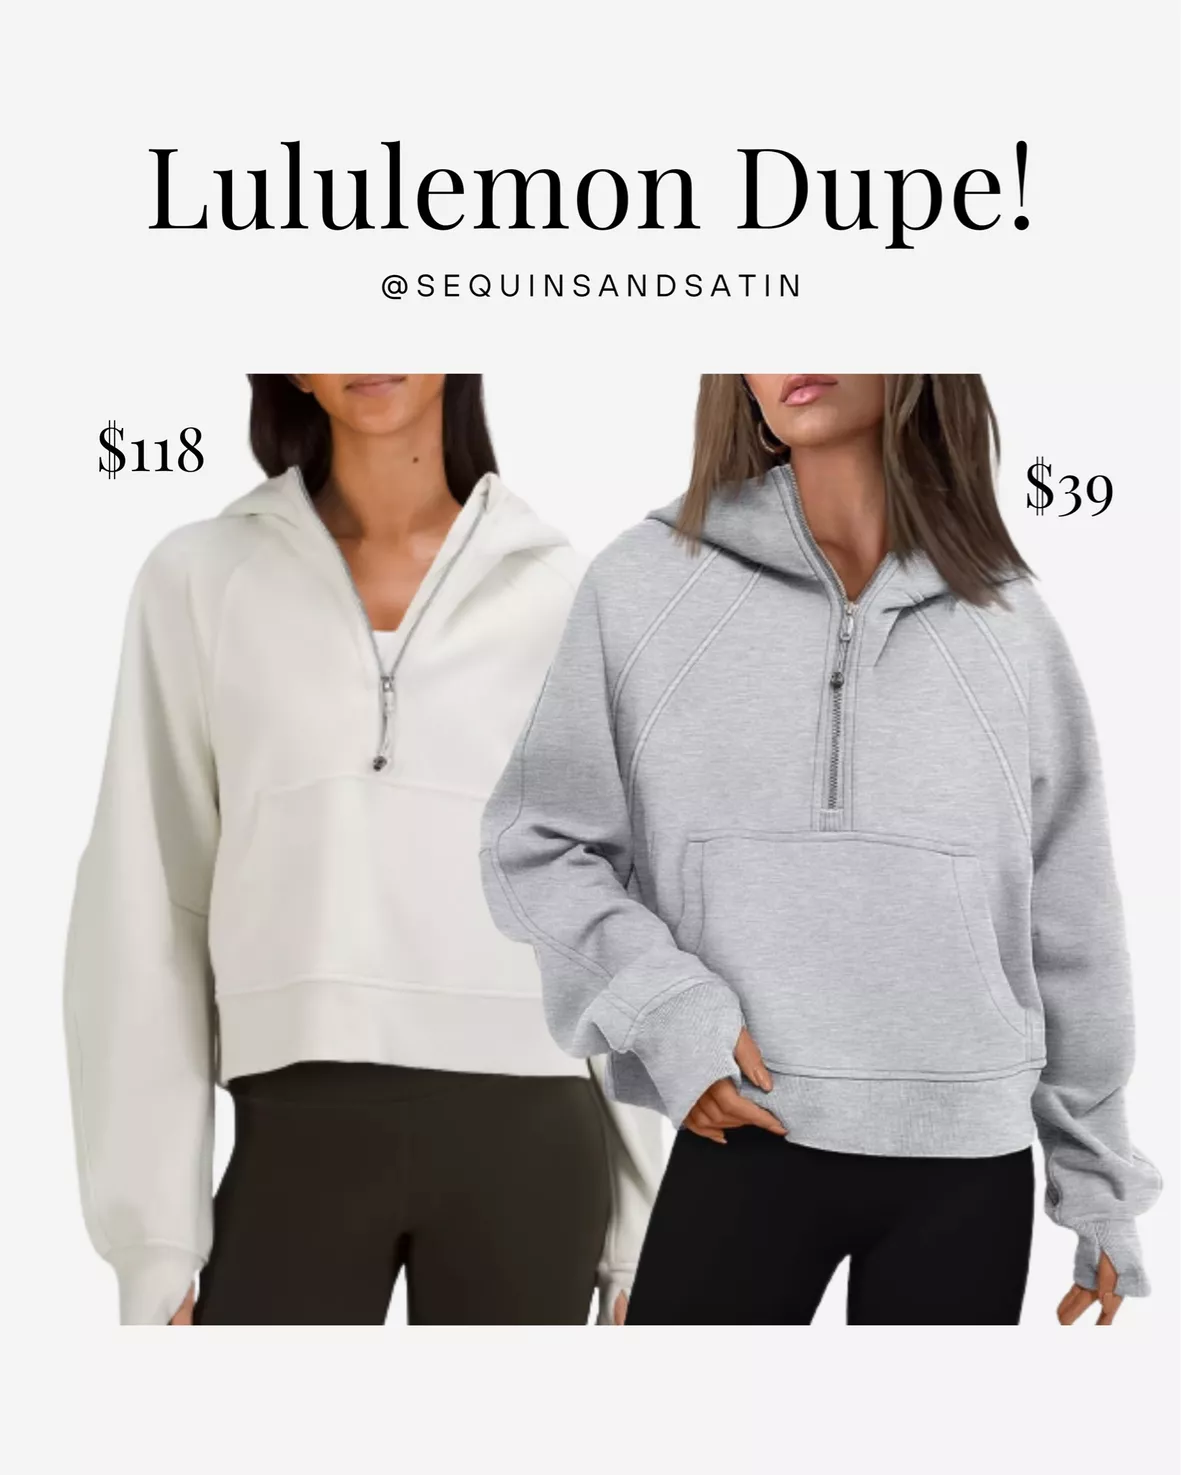 Lululemon scuba hoodie target dupe! Run now this jacket is amazing